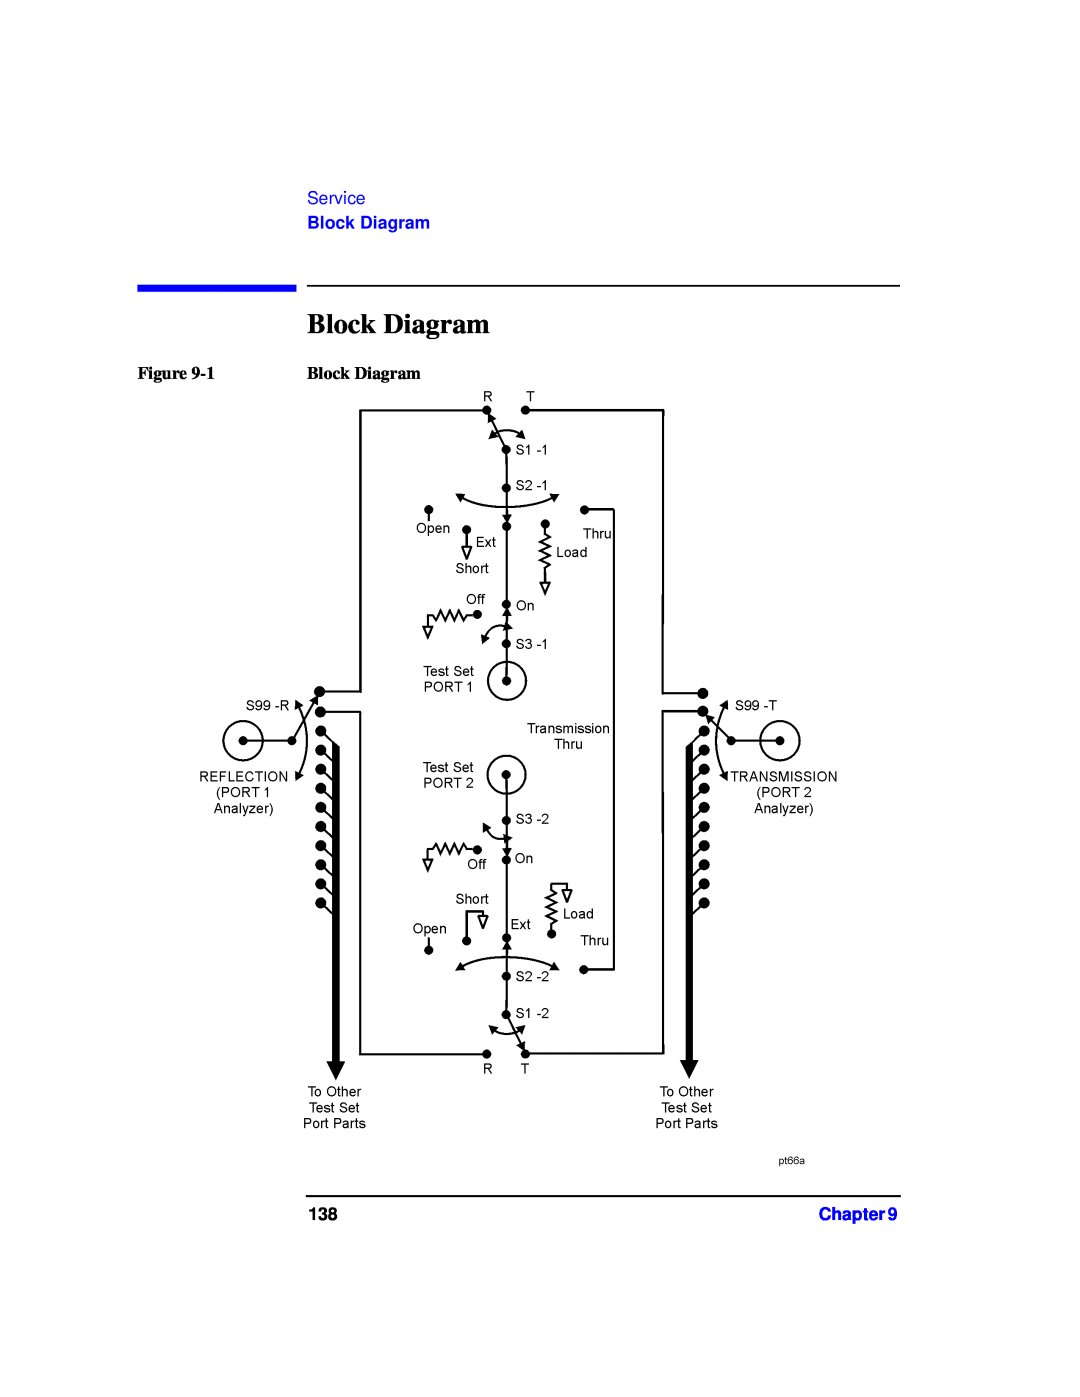 Agilent Technologies 87075C manual Block Diagram, Service, Chapter 